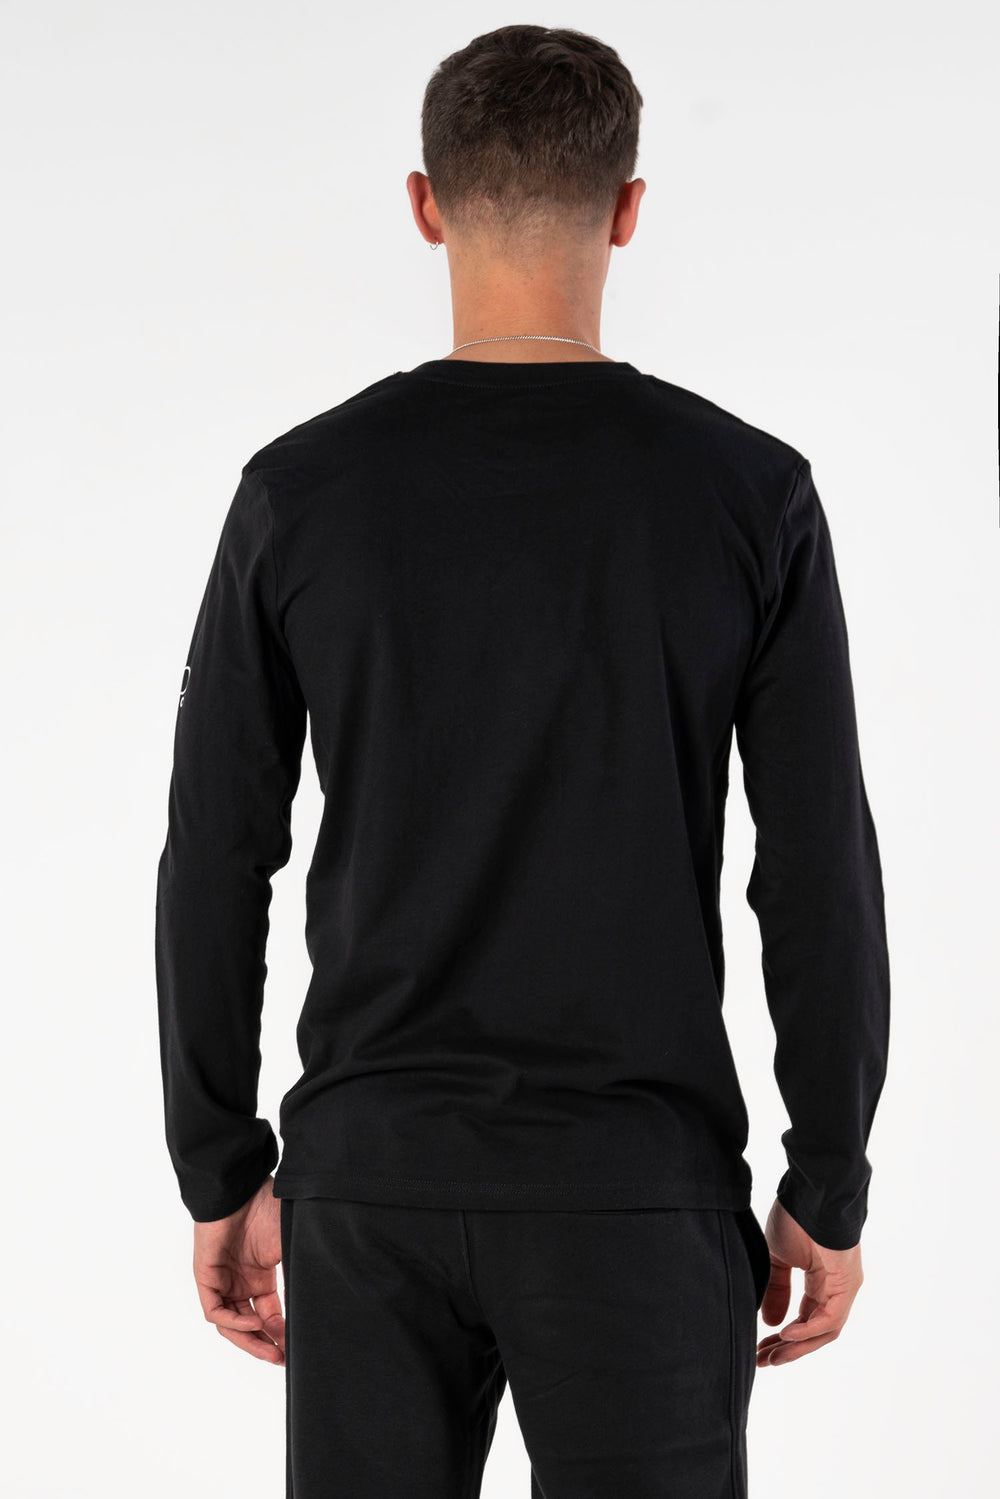 Signature Black Long Sleeve T-shirt-T-shirts-PIRKANI